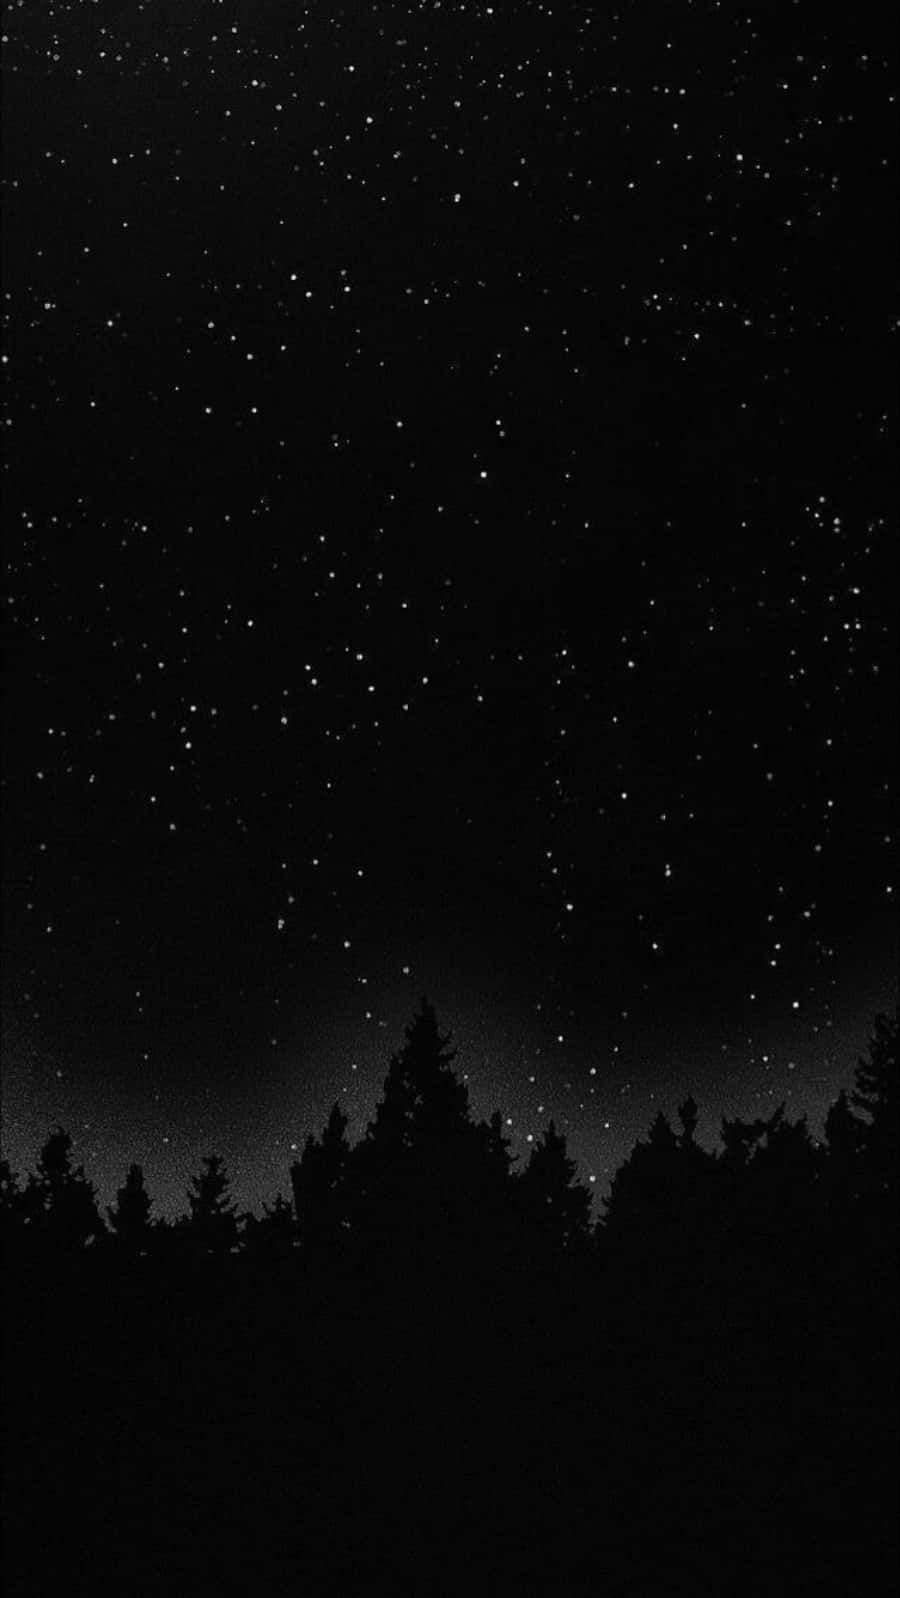 Mørktnattehimmelbillede